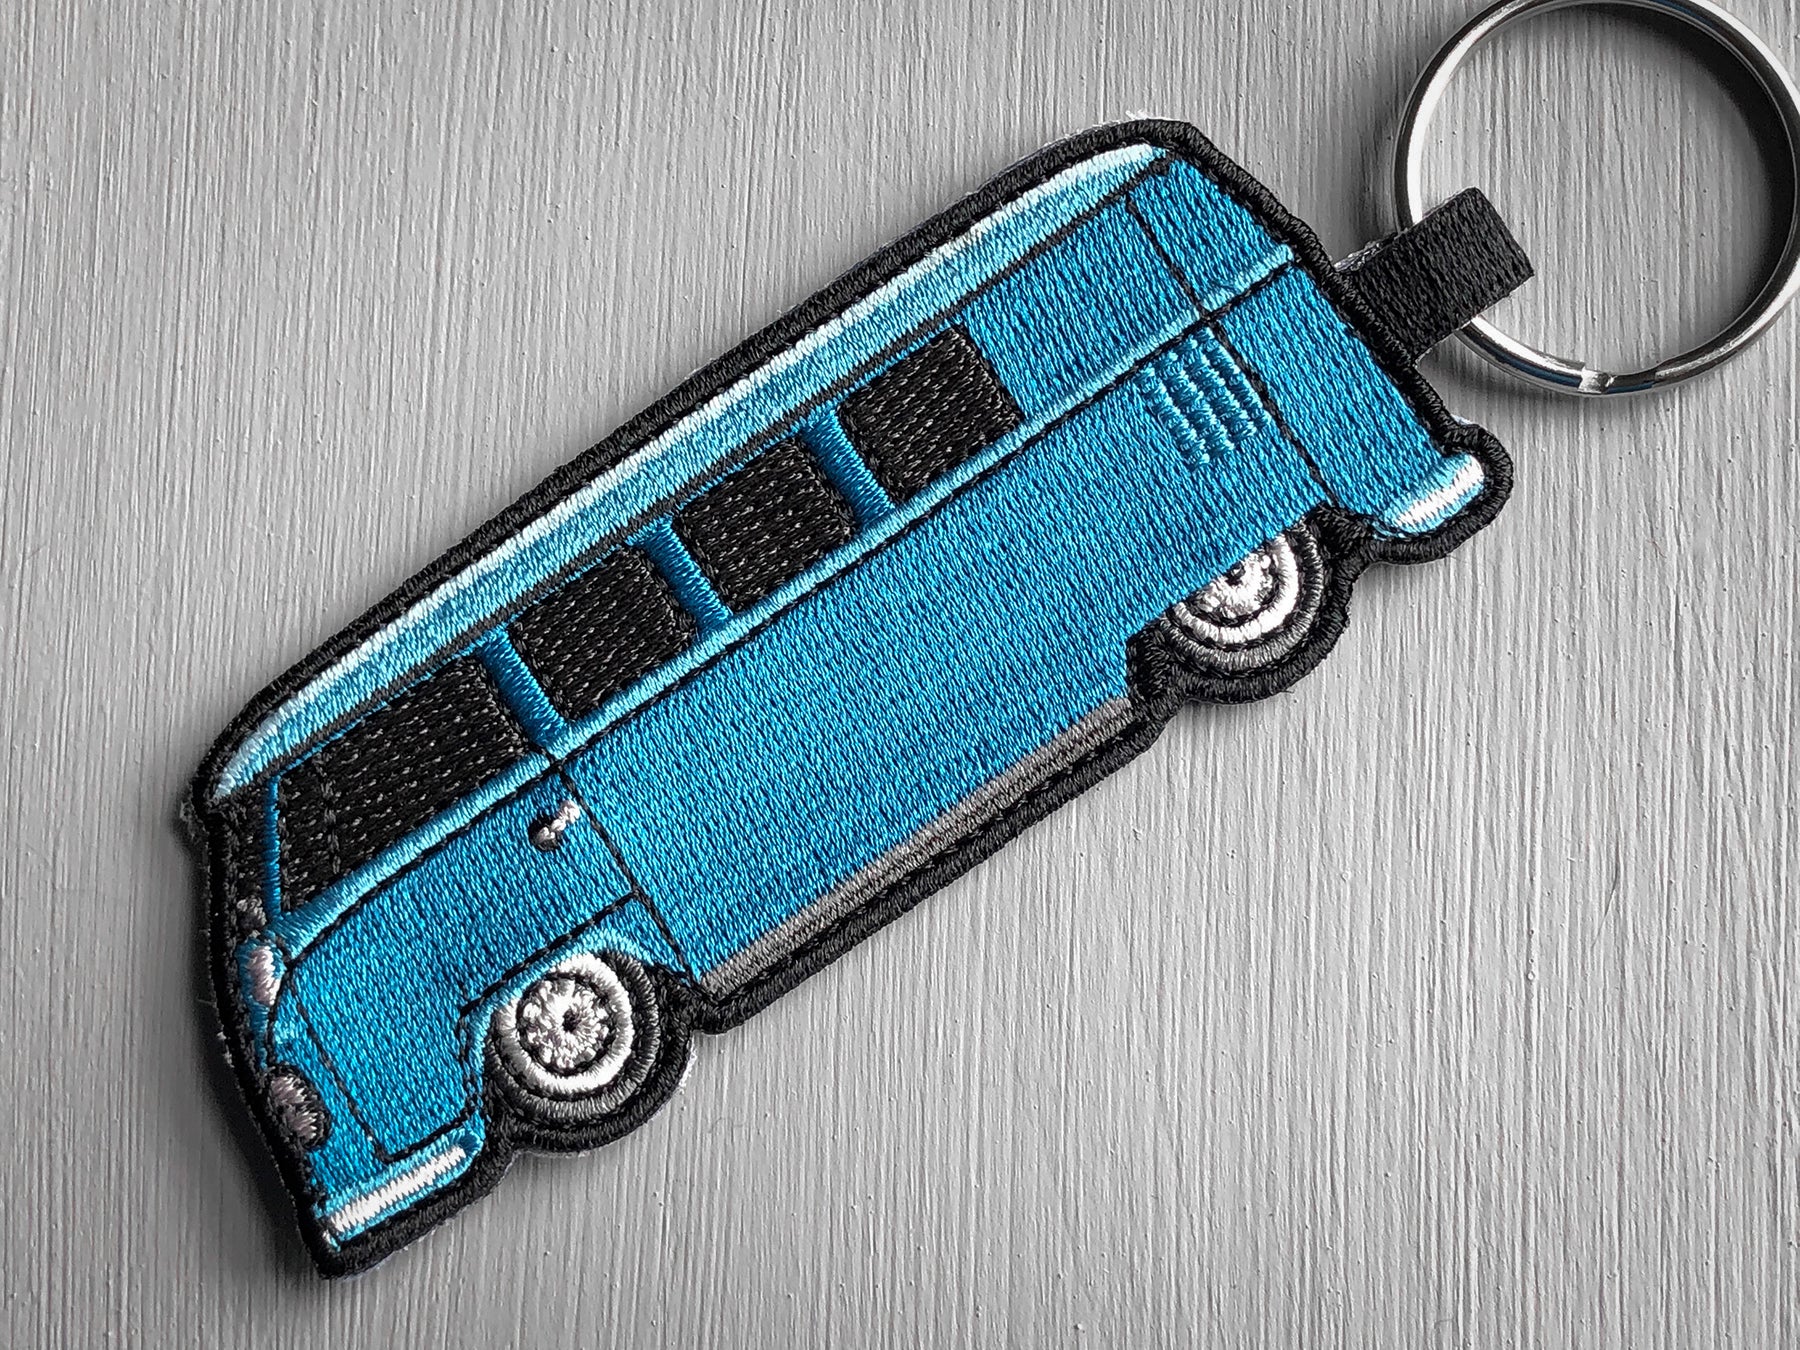 blue vw t1 keychain key chain